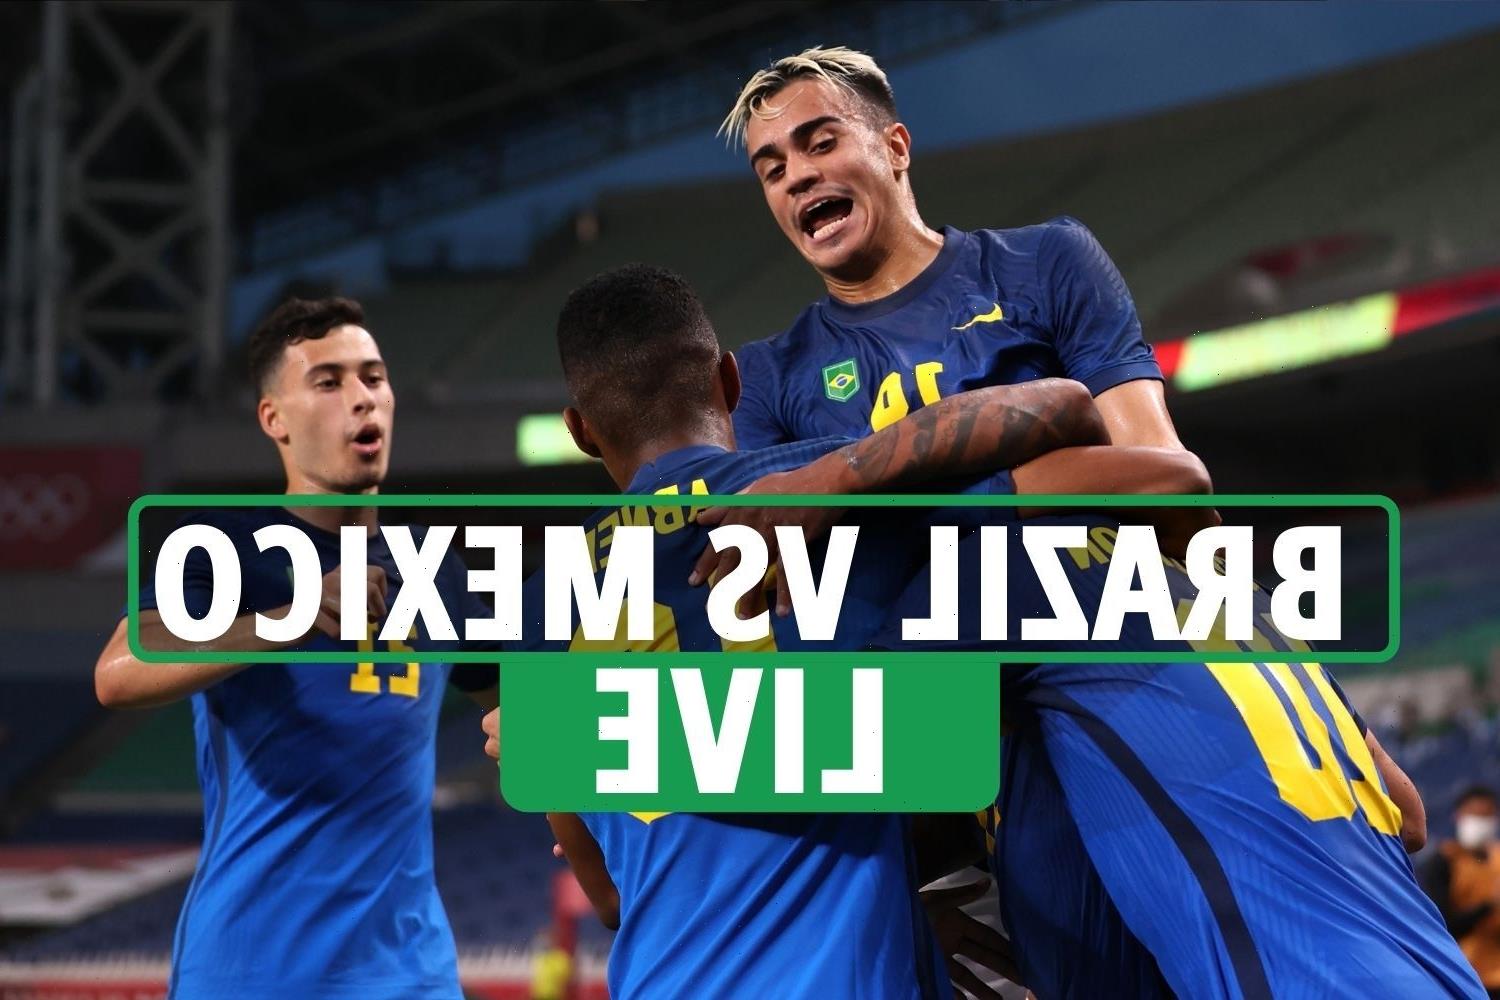 Mexico vs Brazil LIVE Stream, score, TV channel, team news and kick